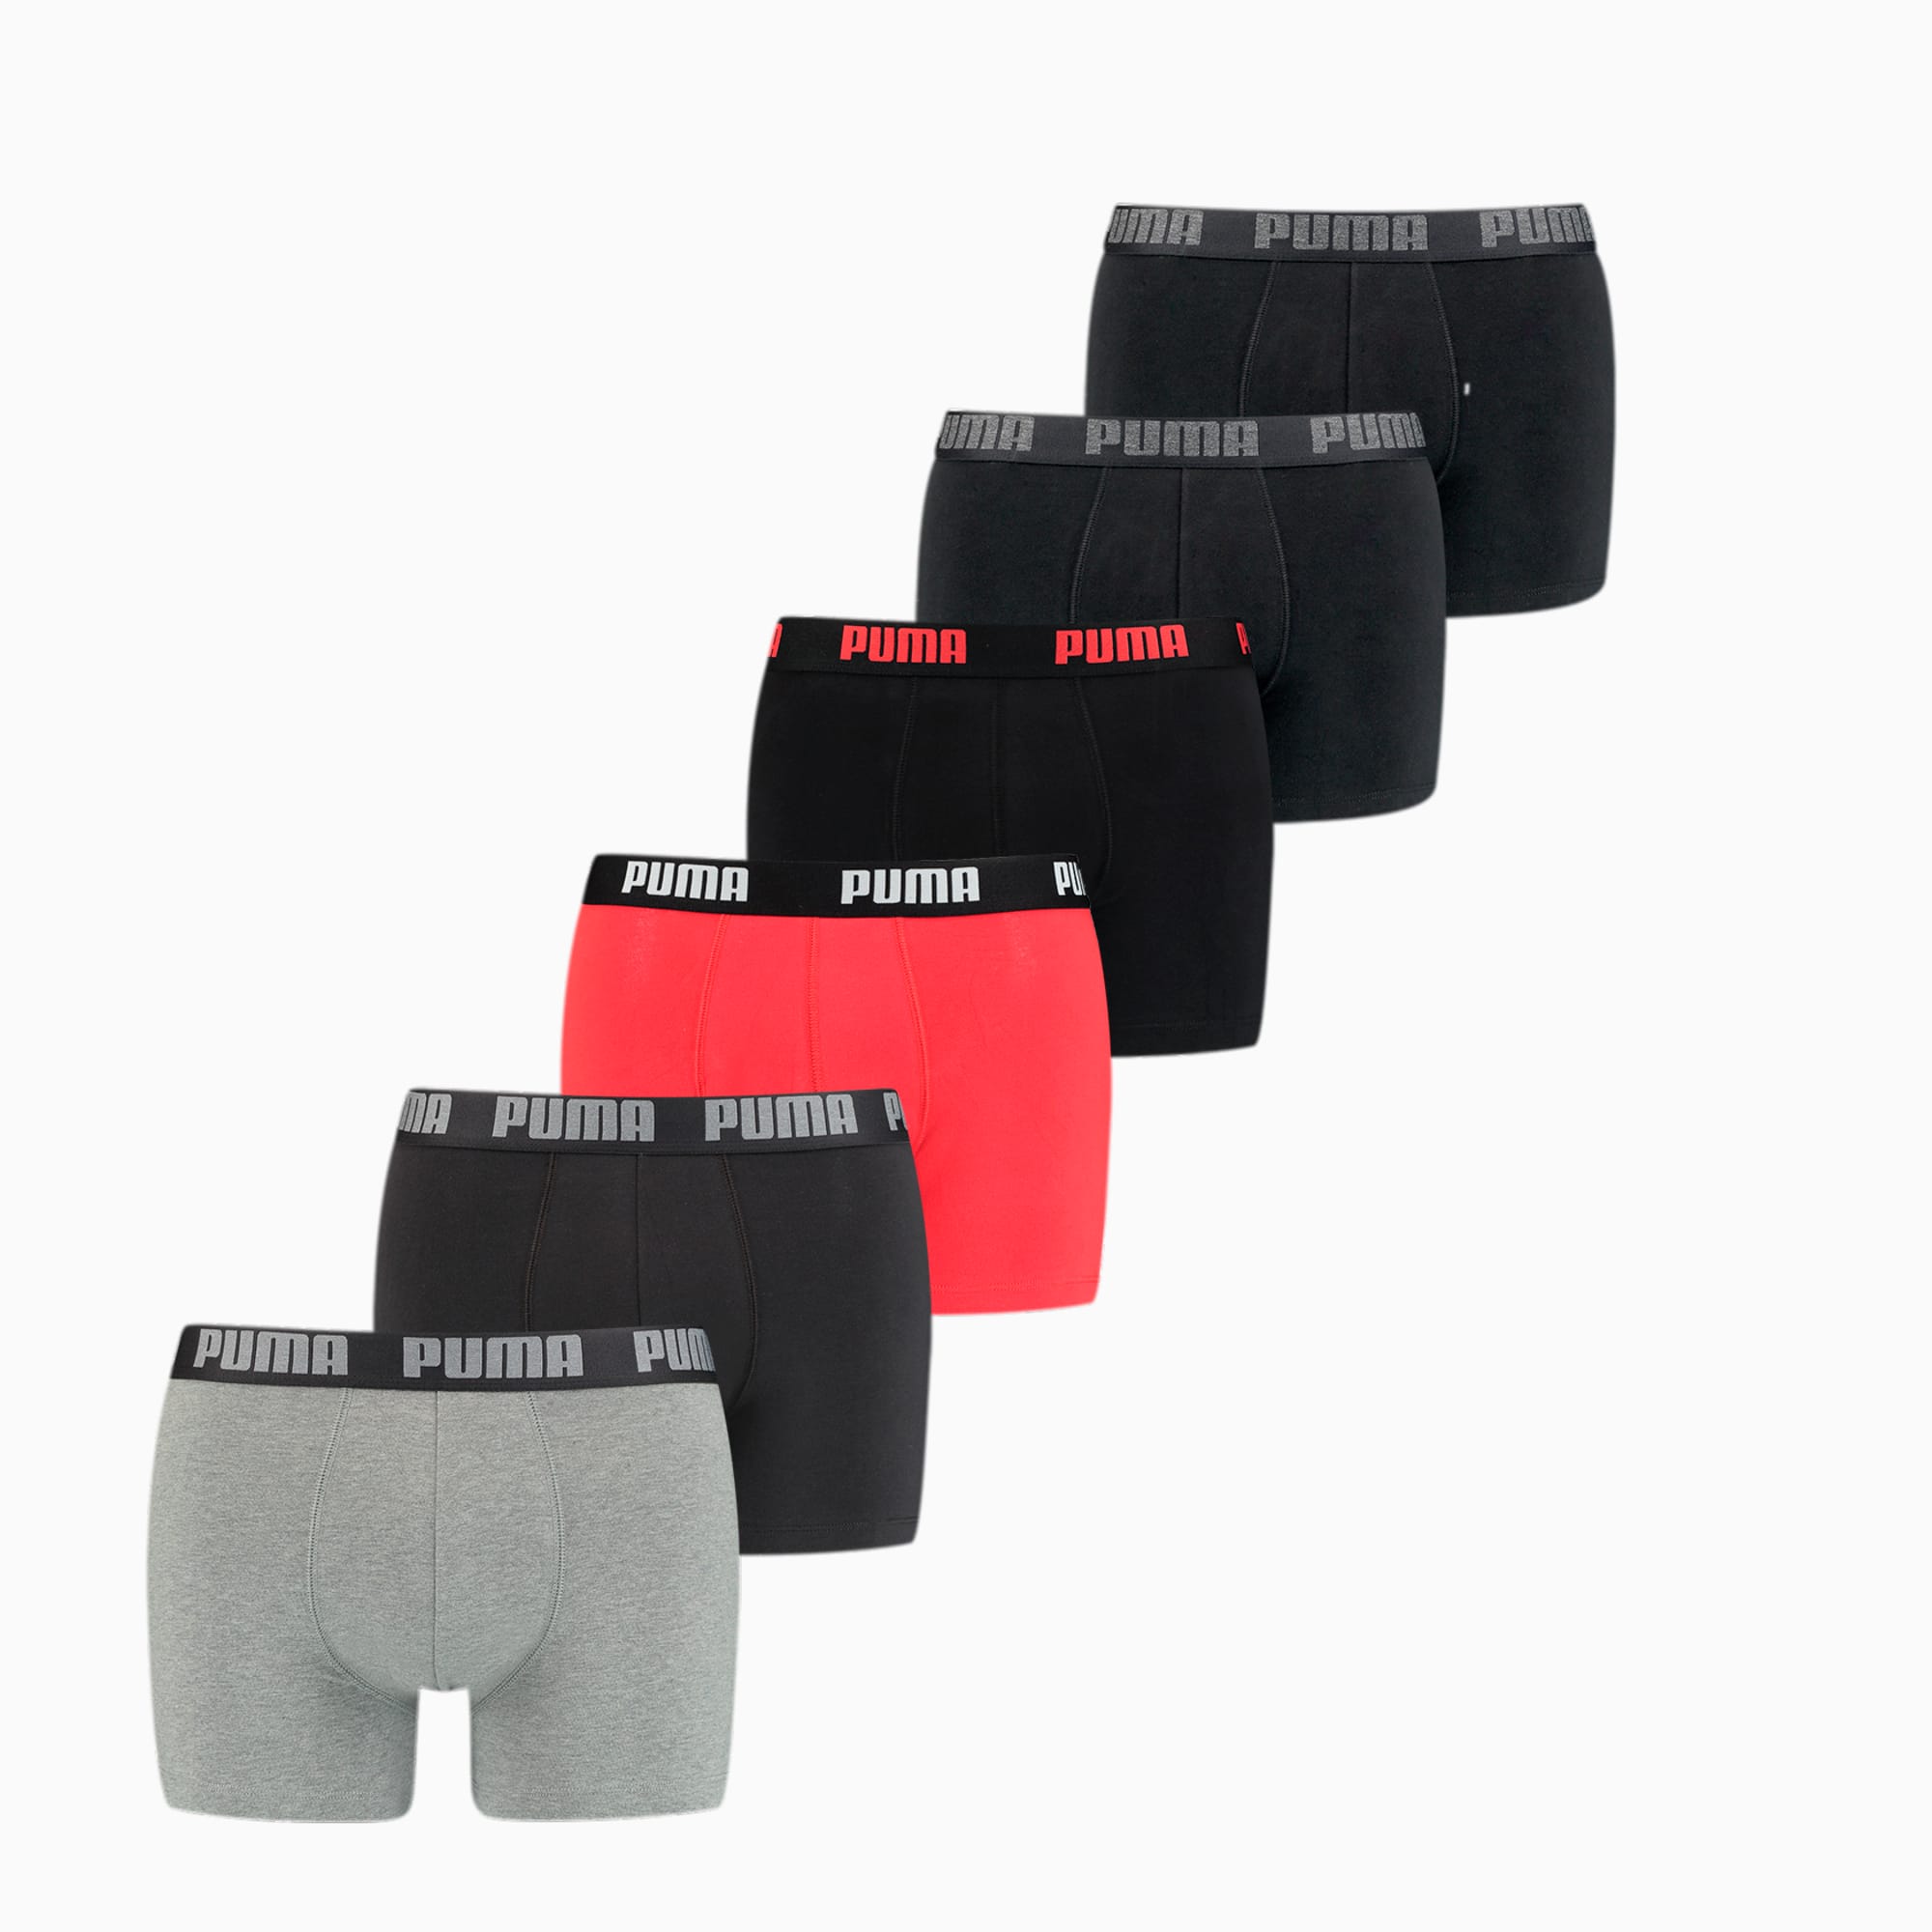 PUMA Basic Men's Boxers 6 Pack, Grey/Black/Red Combo